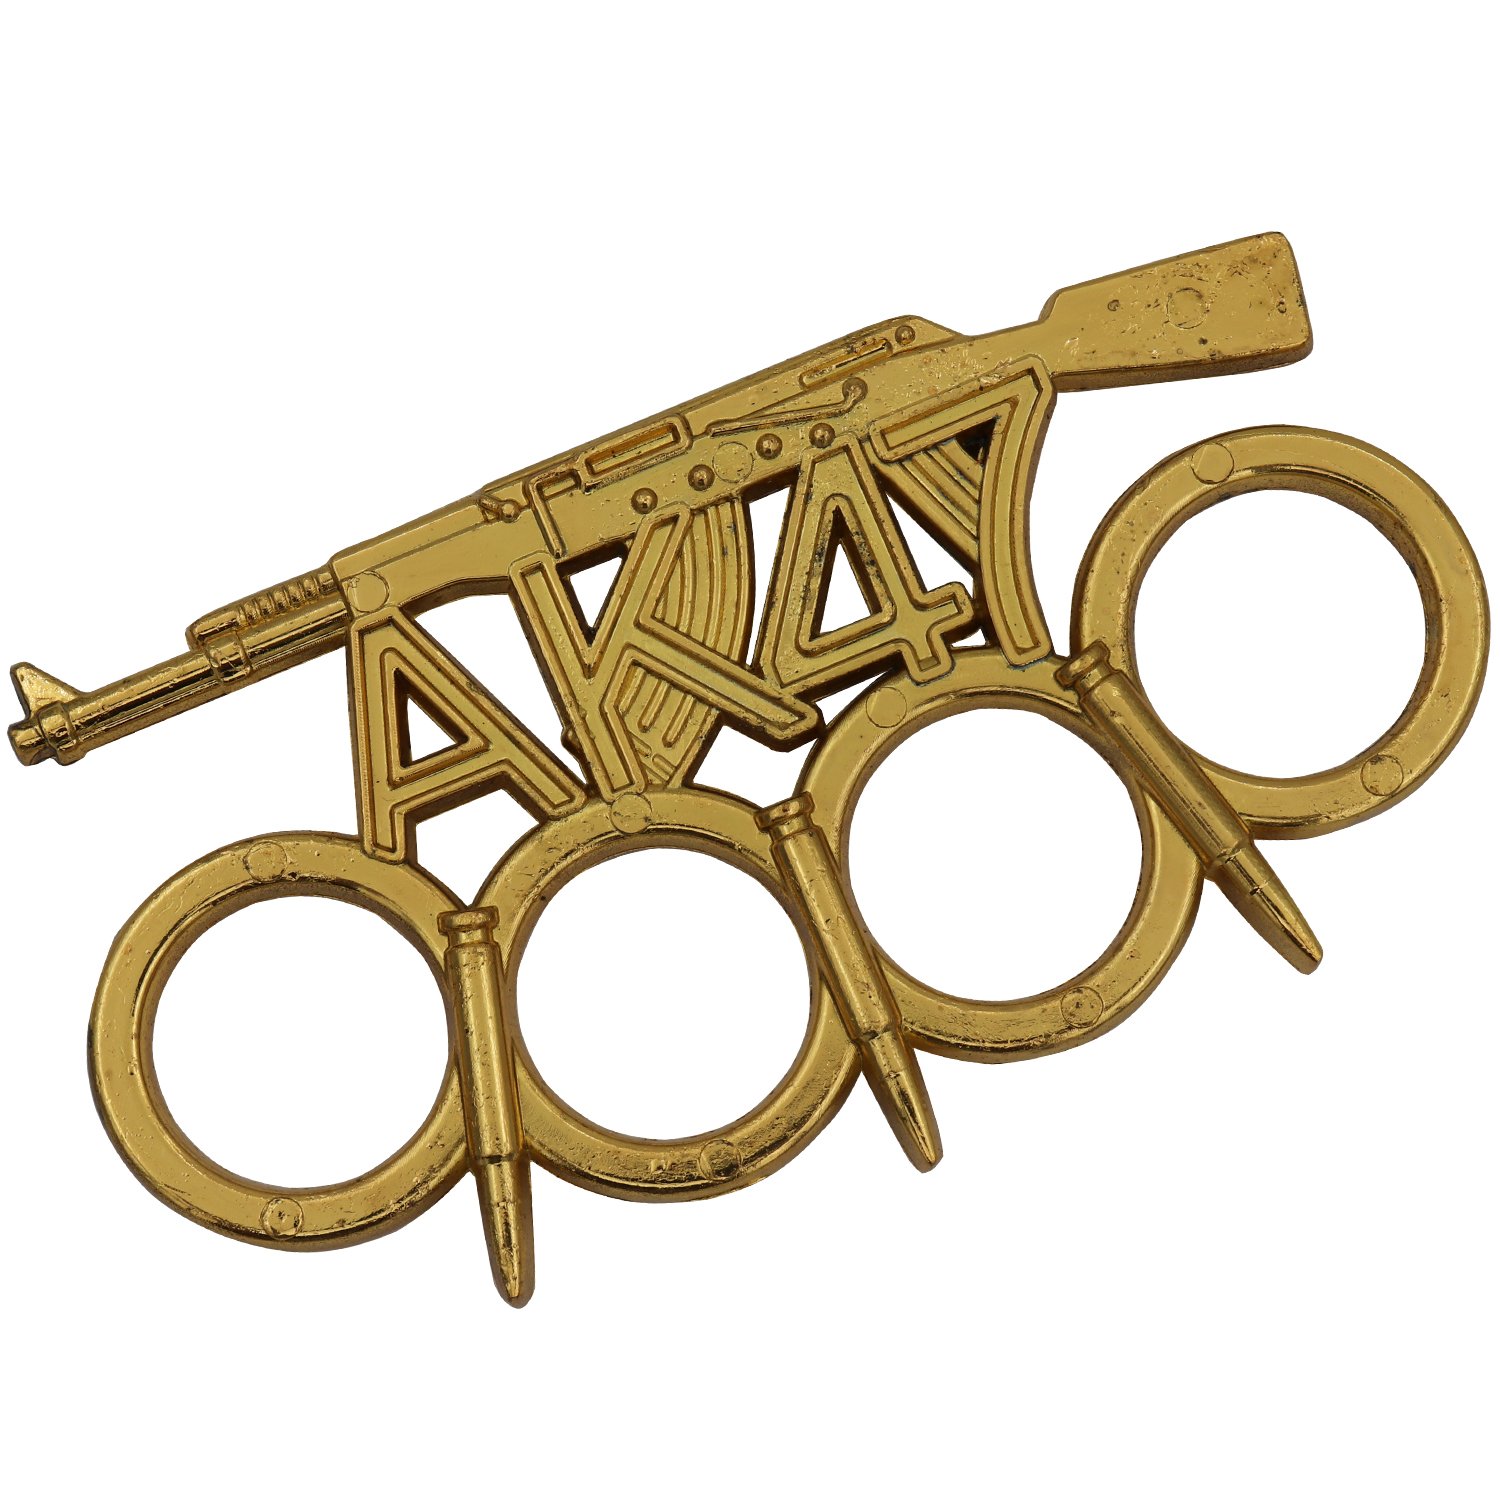 ak-47 brass knuckles antique gold